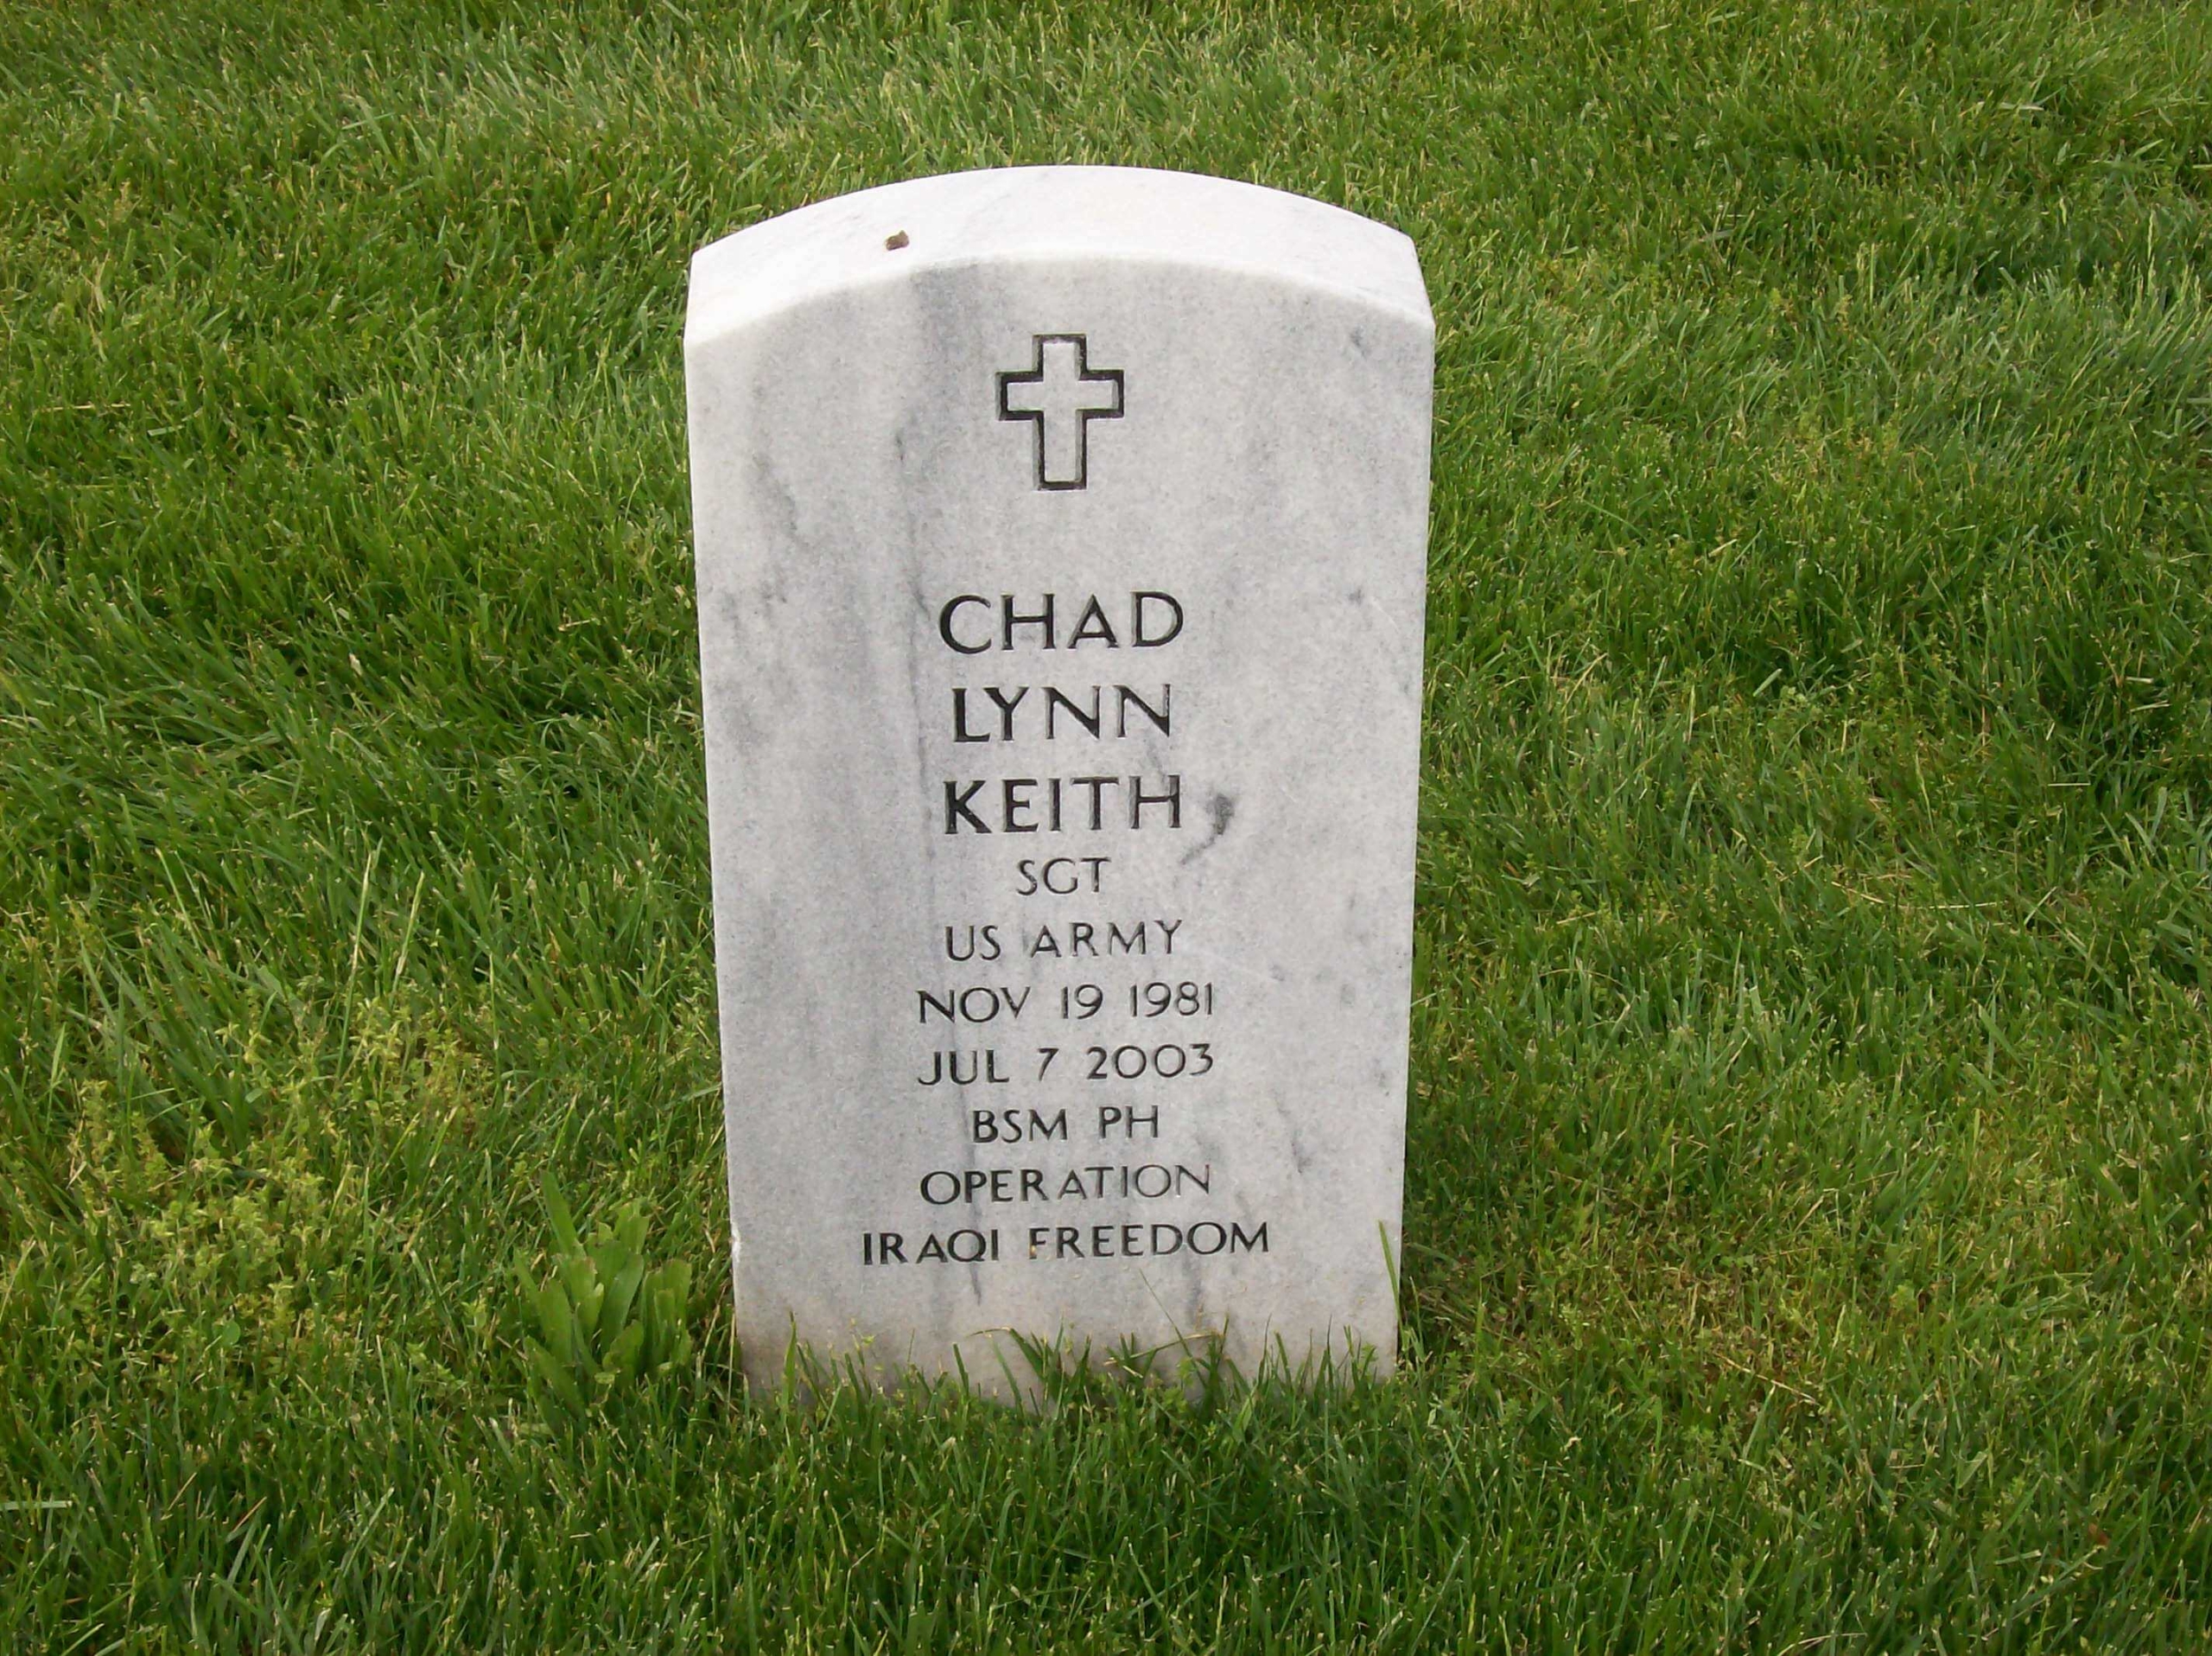 clkeith-gravesite-photo-may-2008-001